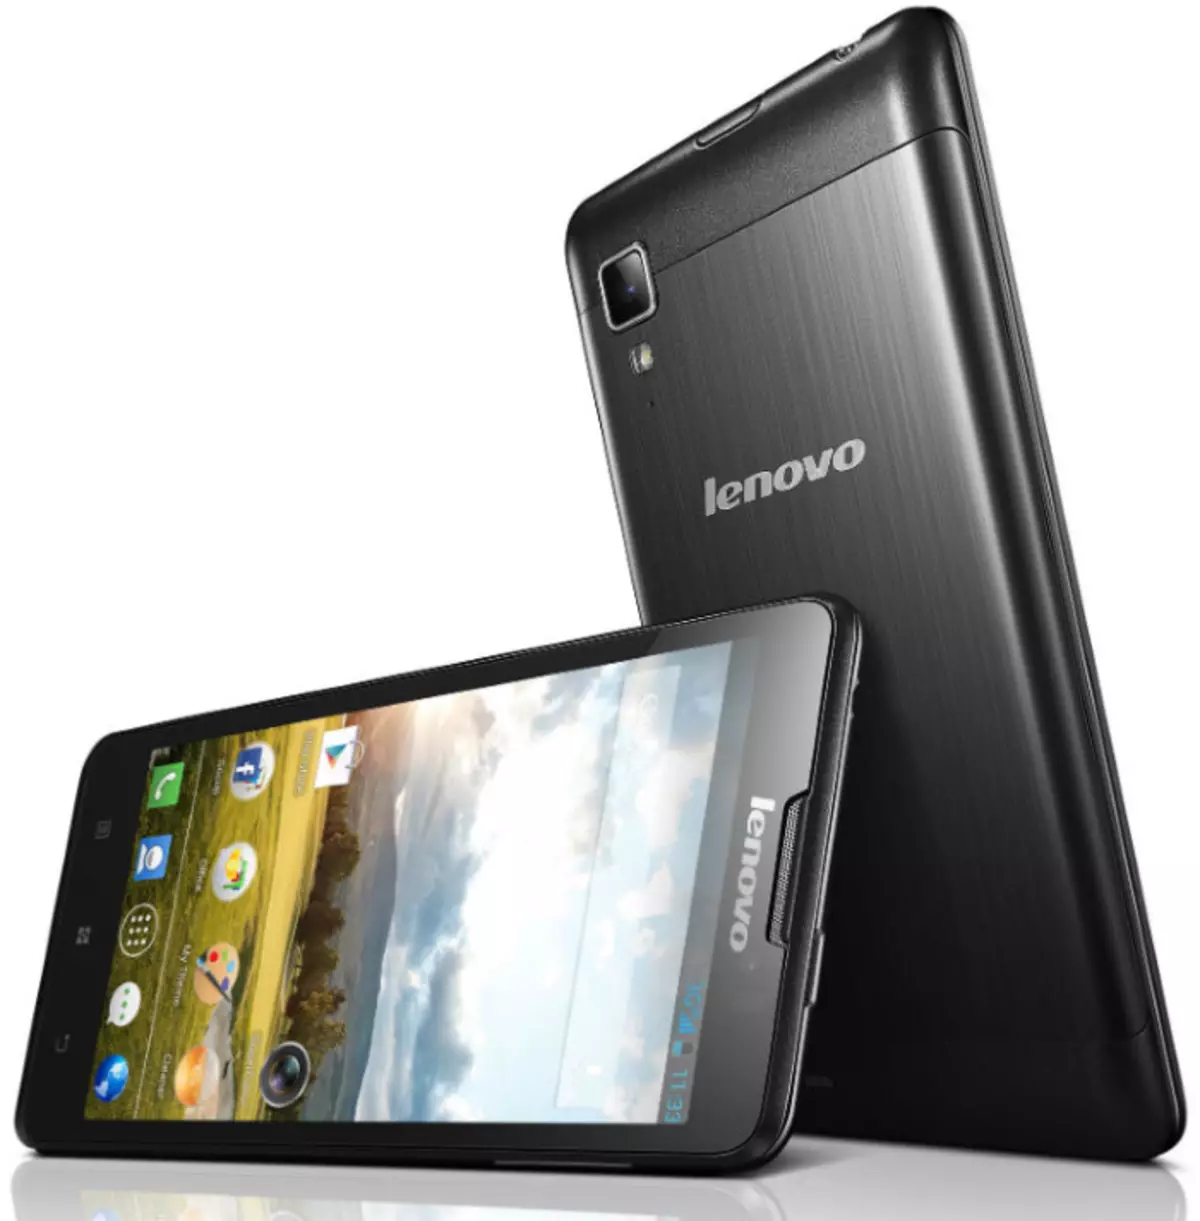 Lenovo IdeaPhone Smartphone firmware P780